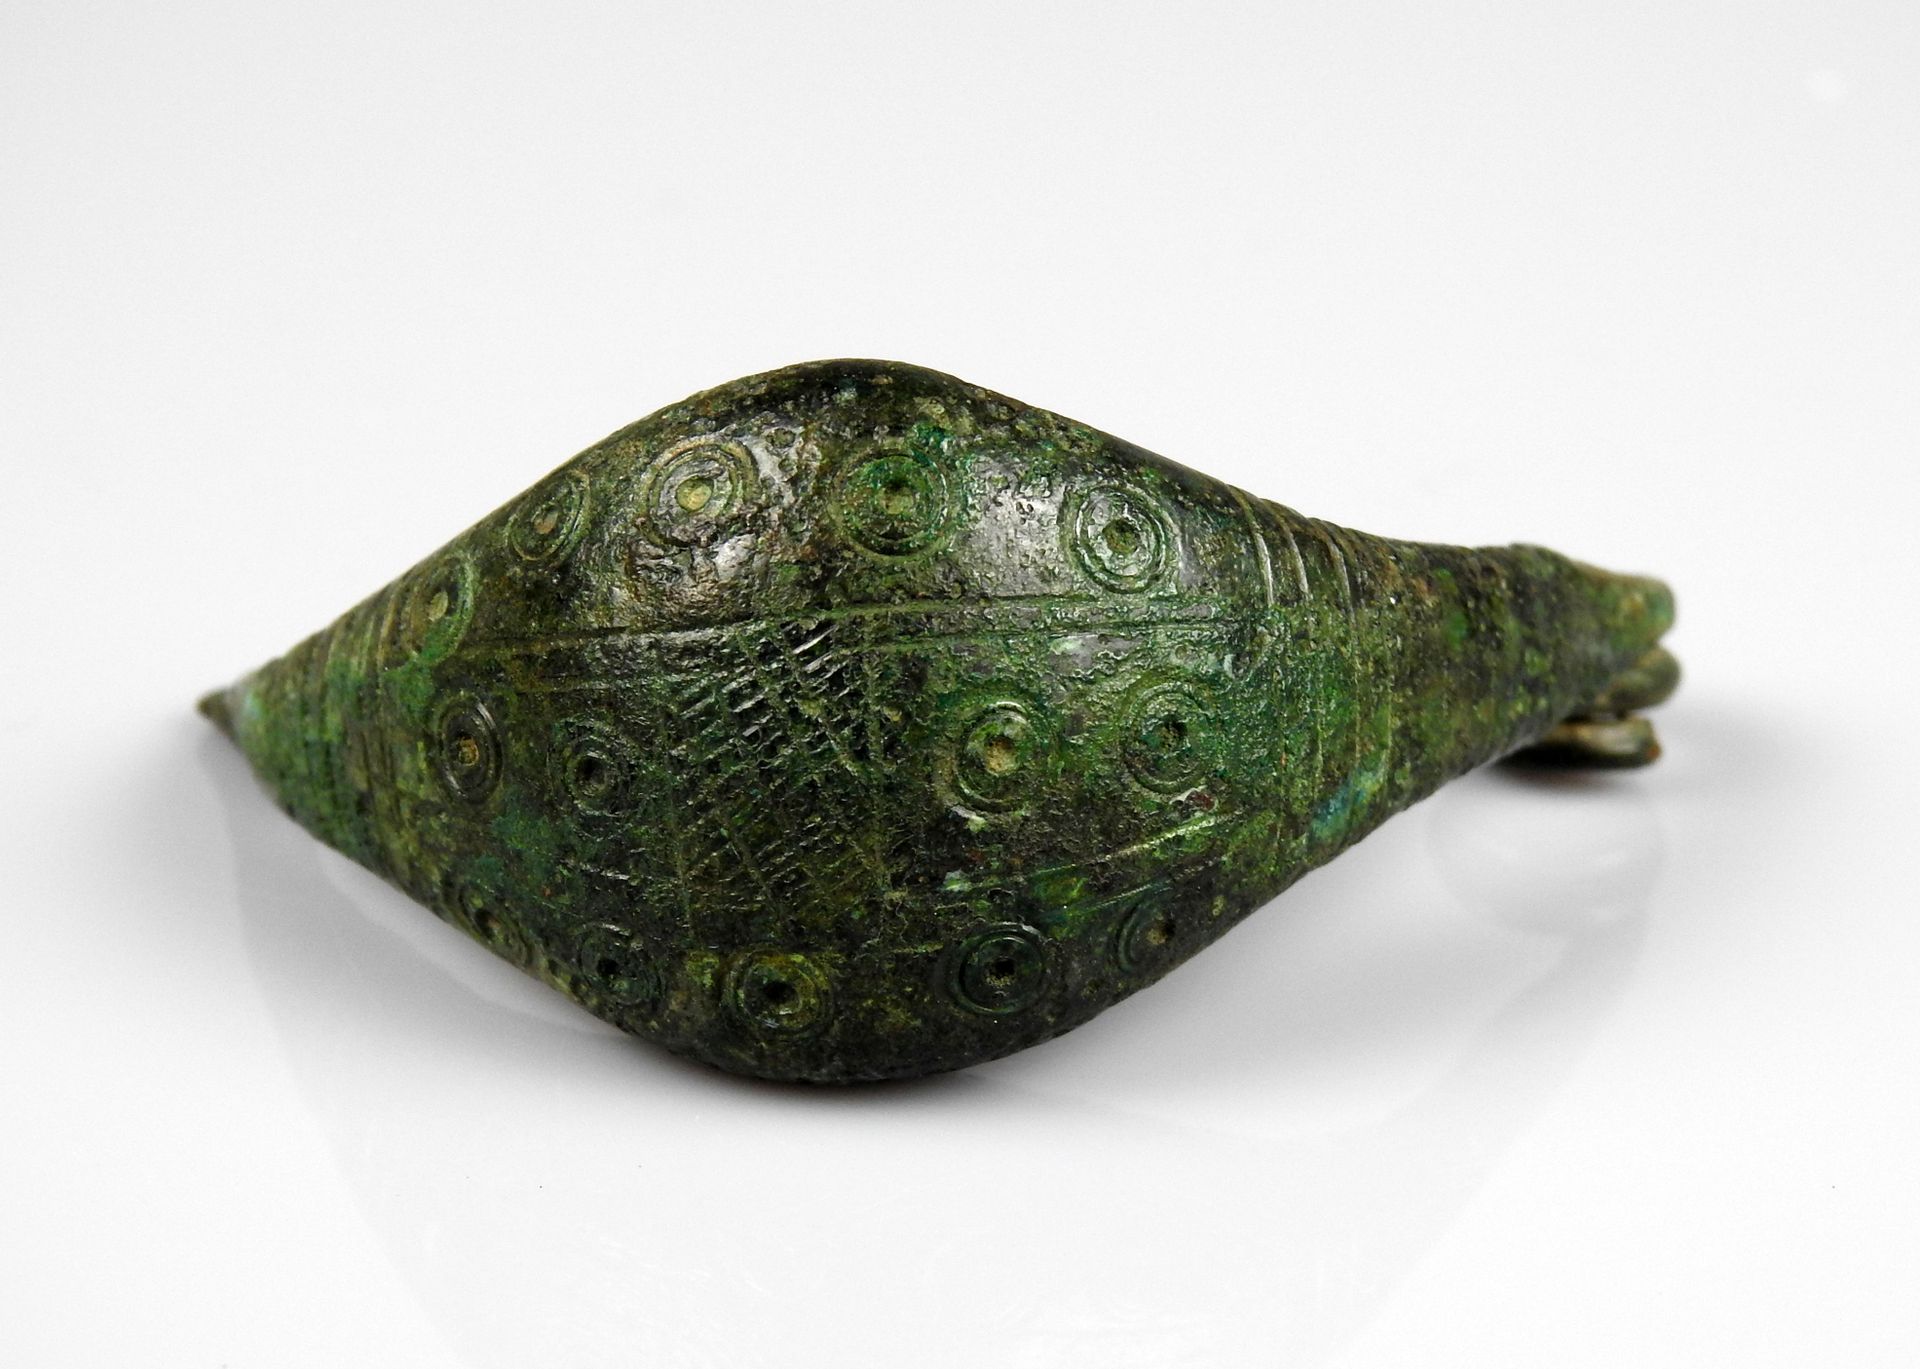 Null 胫骨上的舟状物装饰有卵石

前19世纪某省著名人士的收藏

青铜6.5厘米

Etruscan世界 公元前八至七世纪